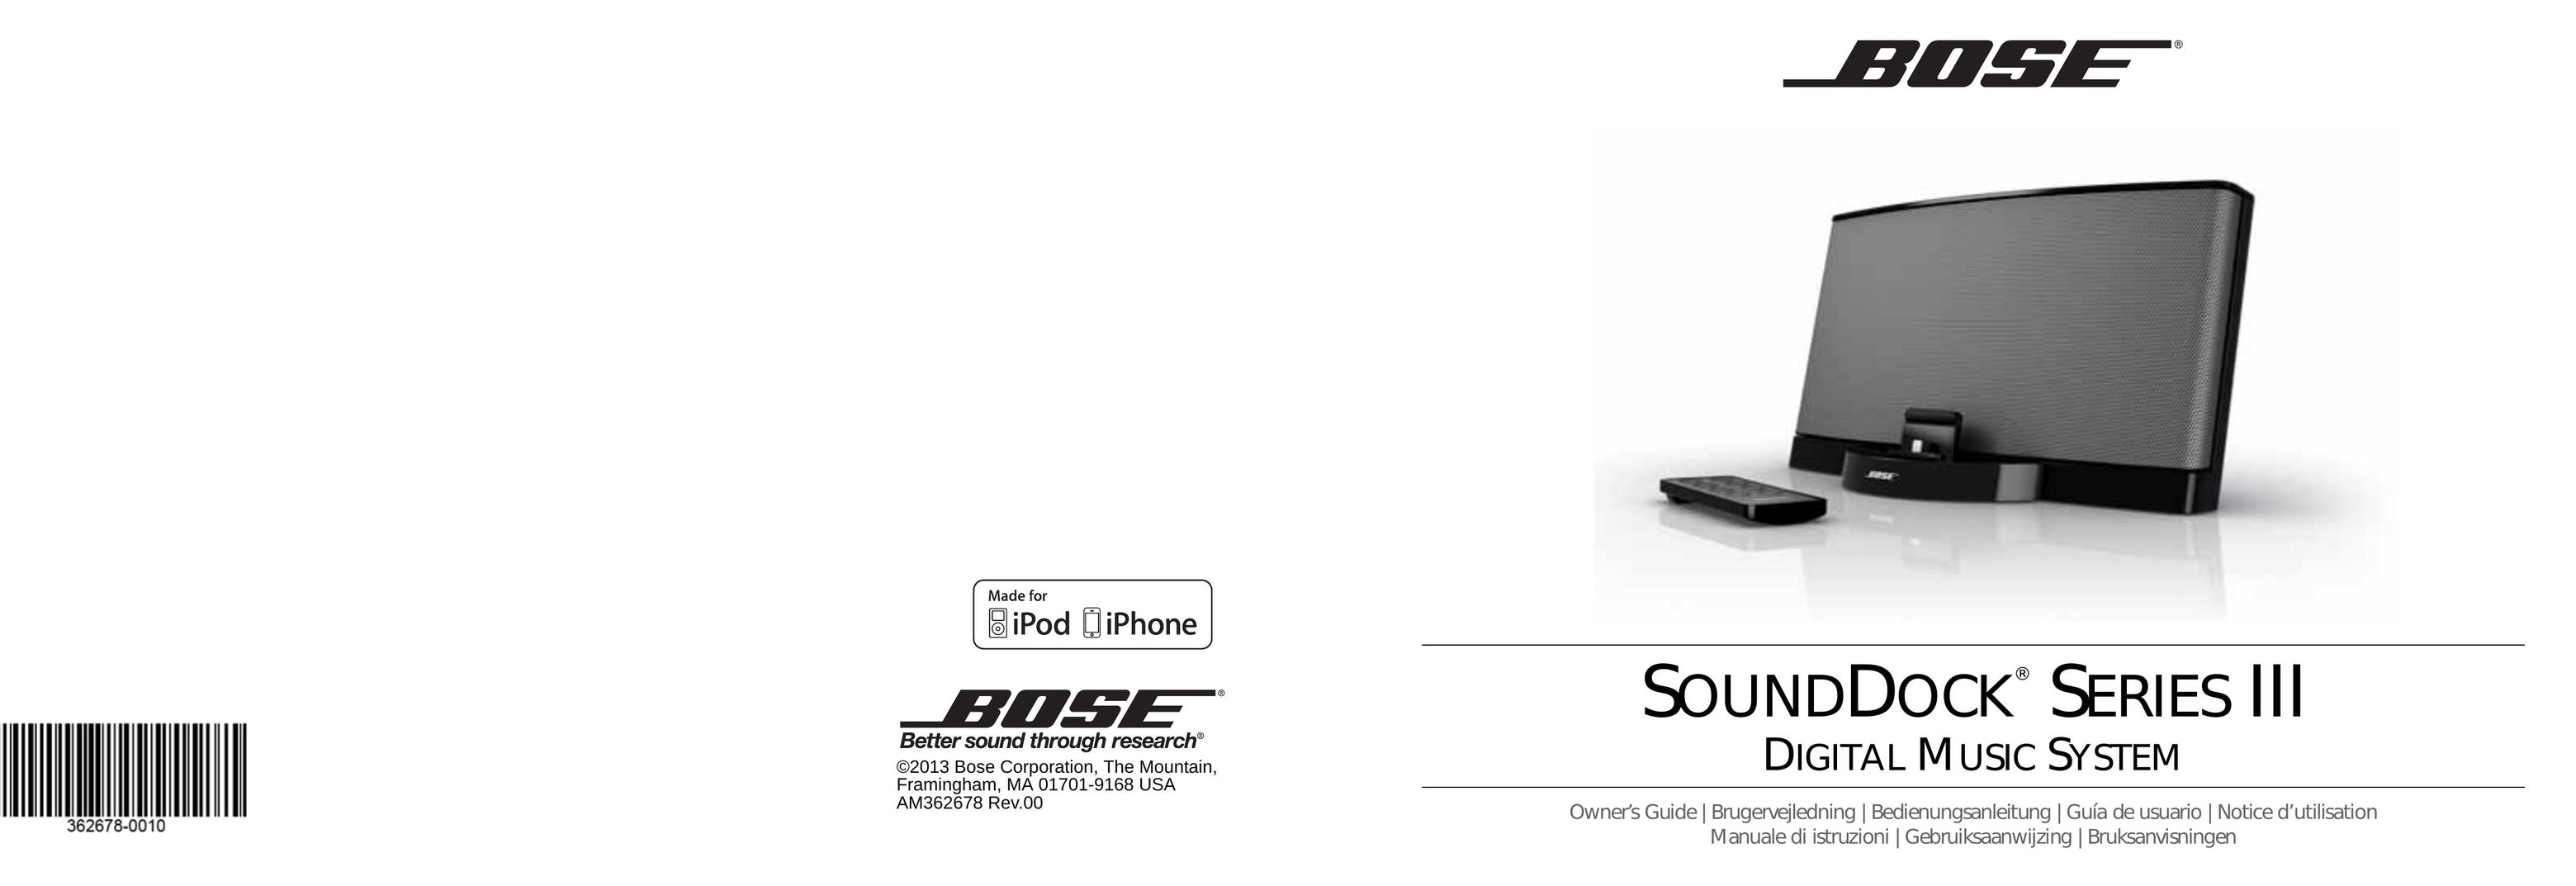 Bose SoundDock Series III MP3 Docking Station User Manual